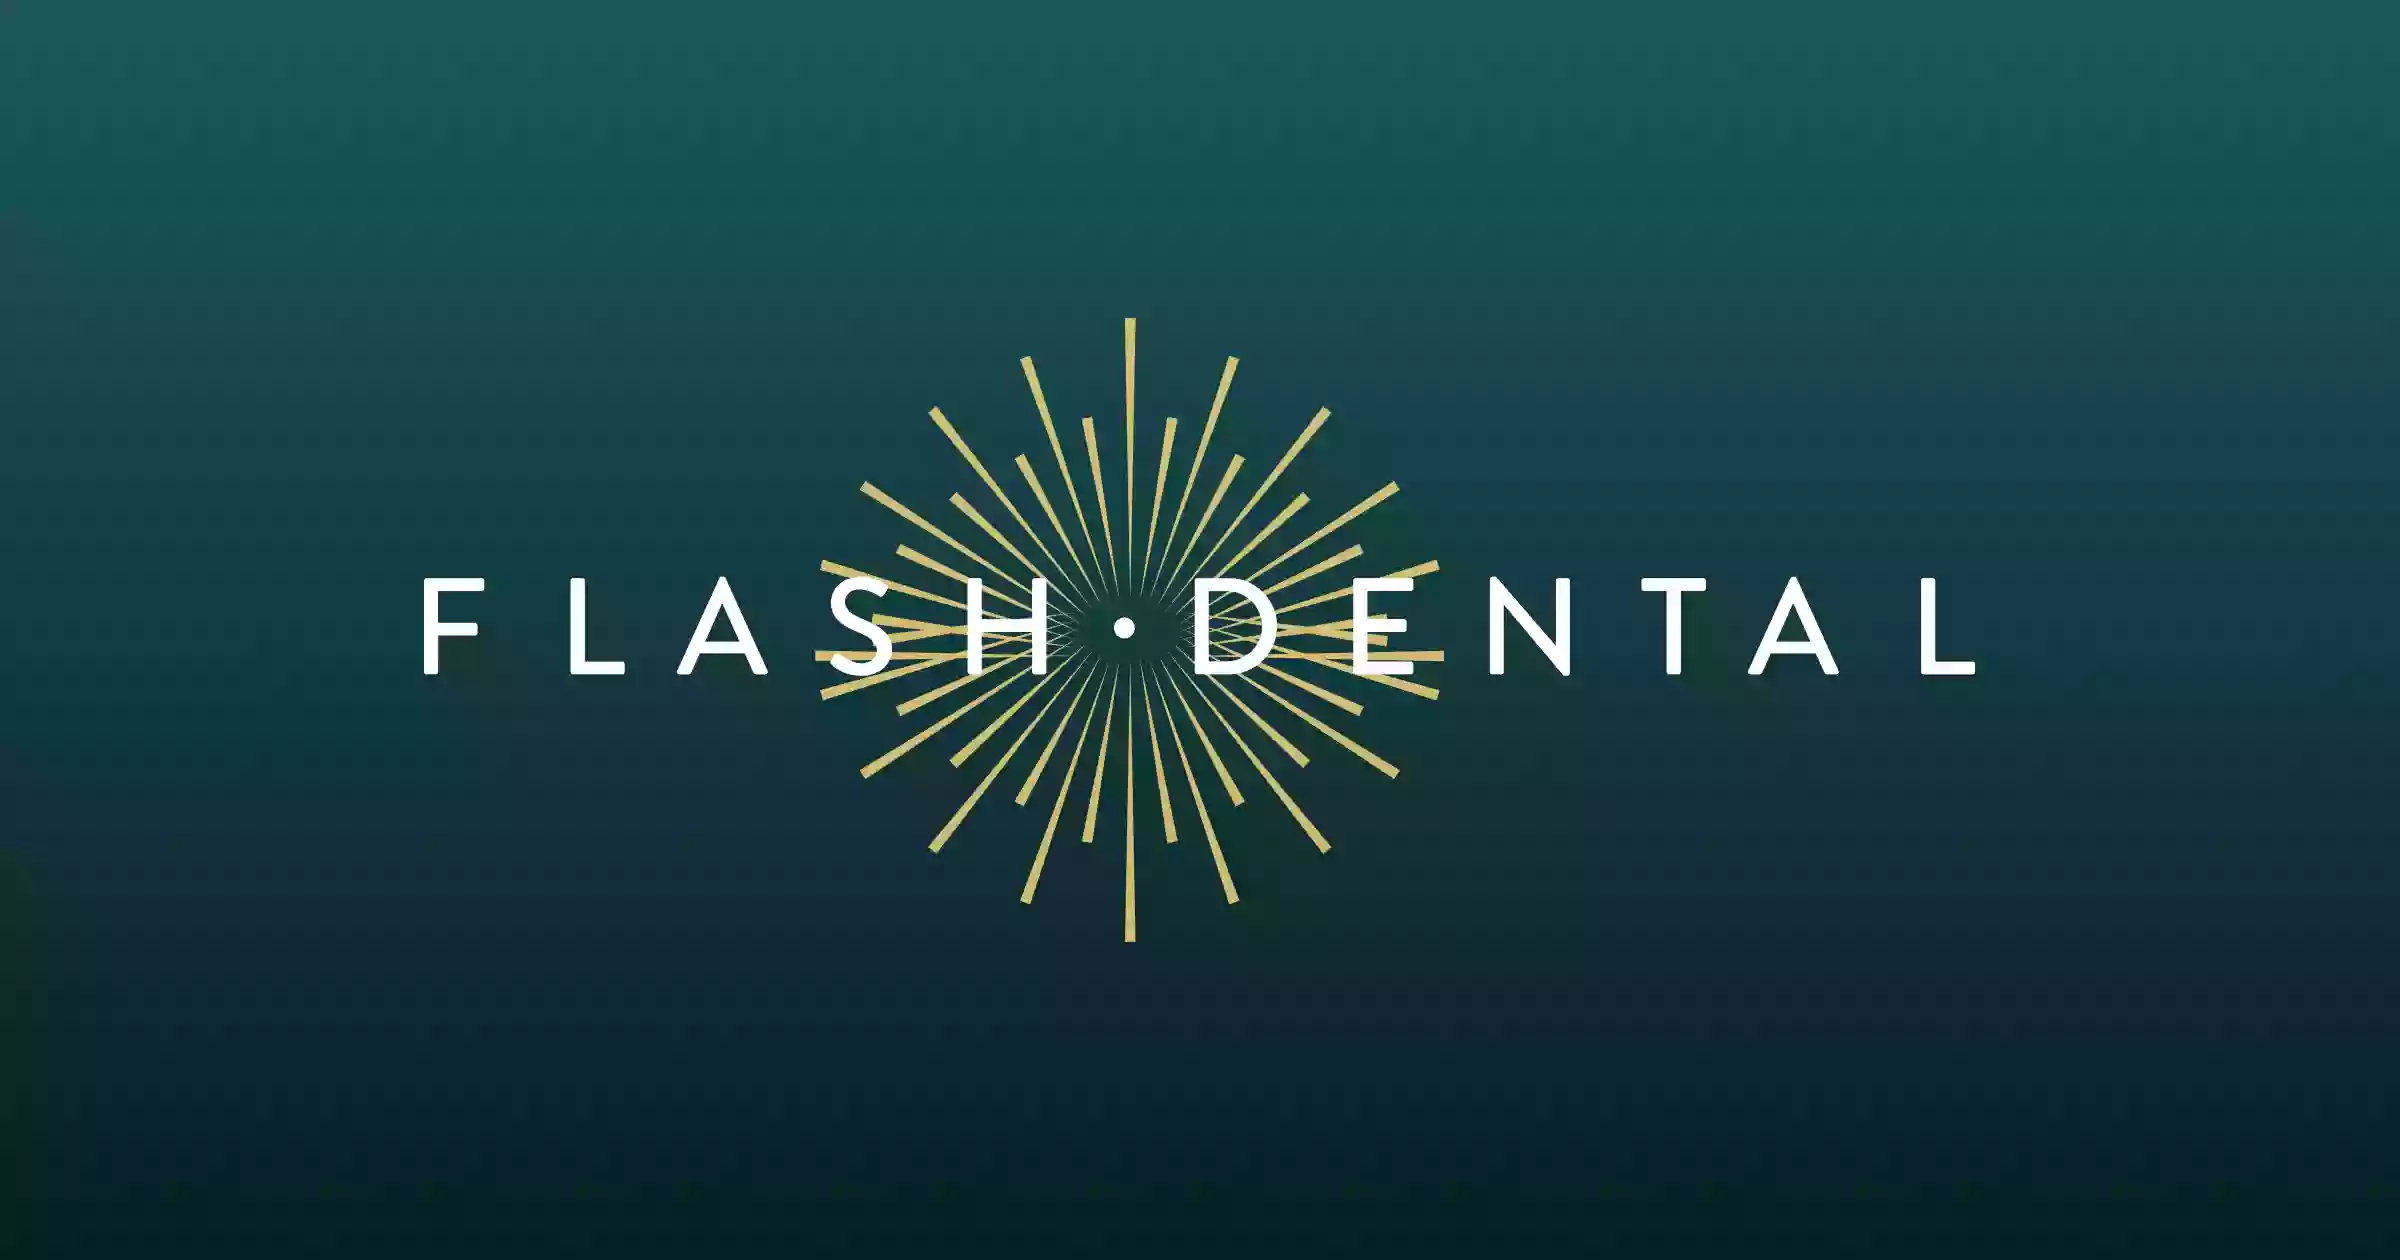 Flash Dental Heights